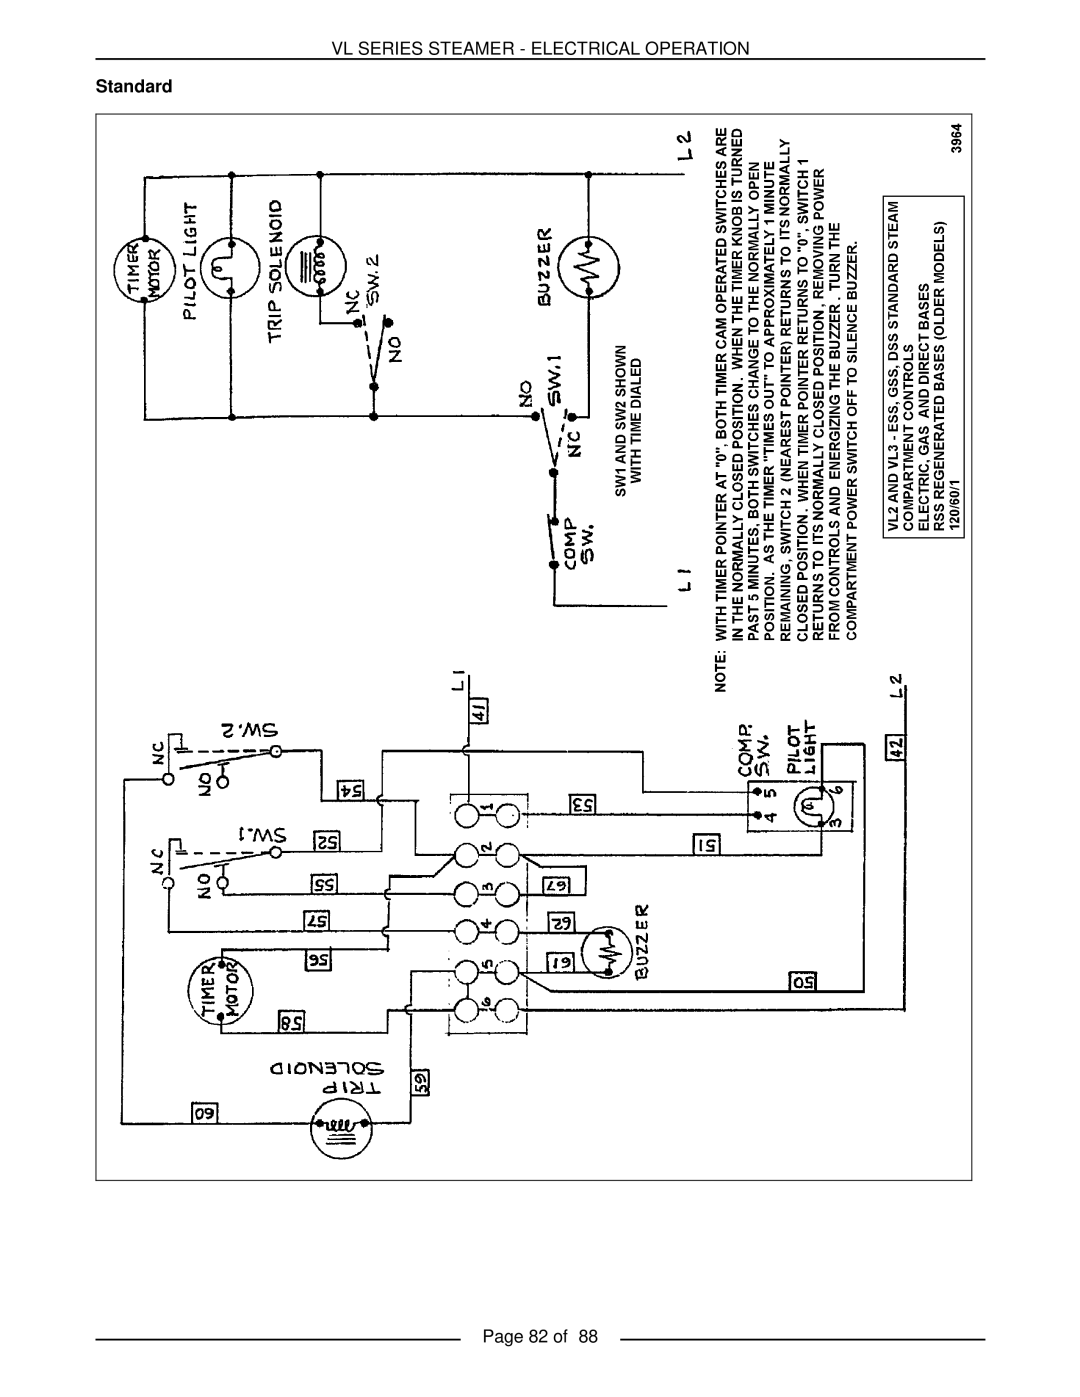 Vulcan-Hart VL3GAS, VL3GMS, VL2GMS, VL2GAS, VL2GSS, VL3GSS Vl Series Steamer - Electrical Operation, Standard, Page 82 of 